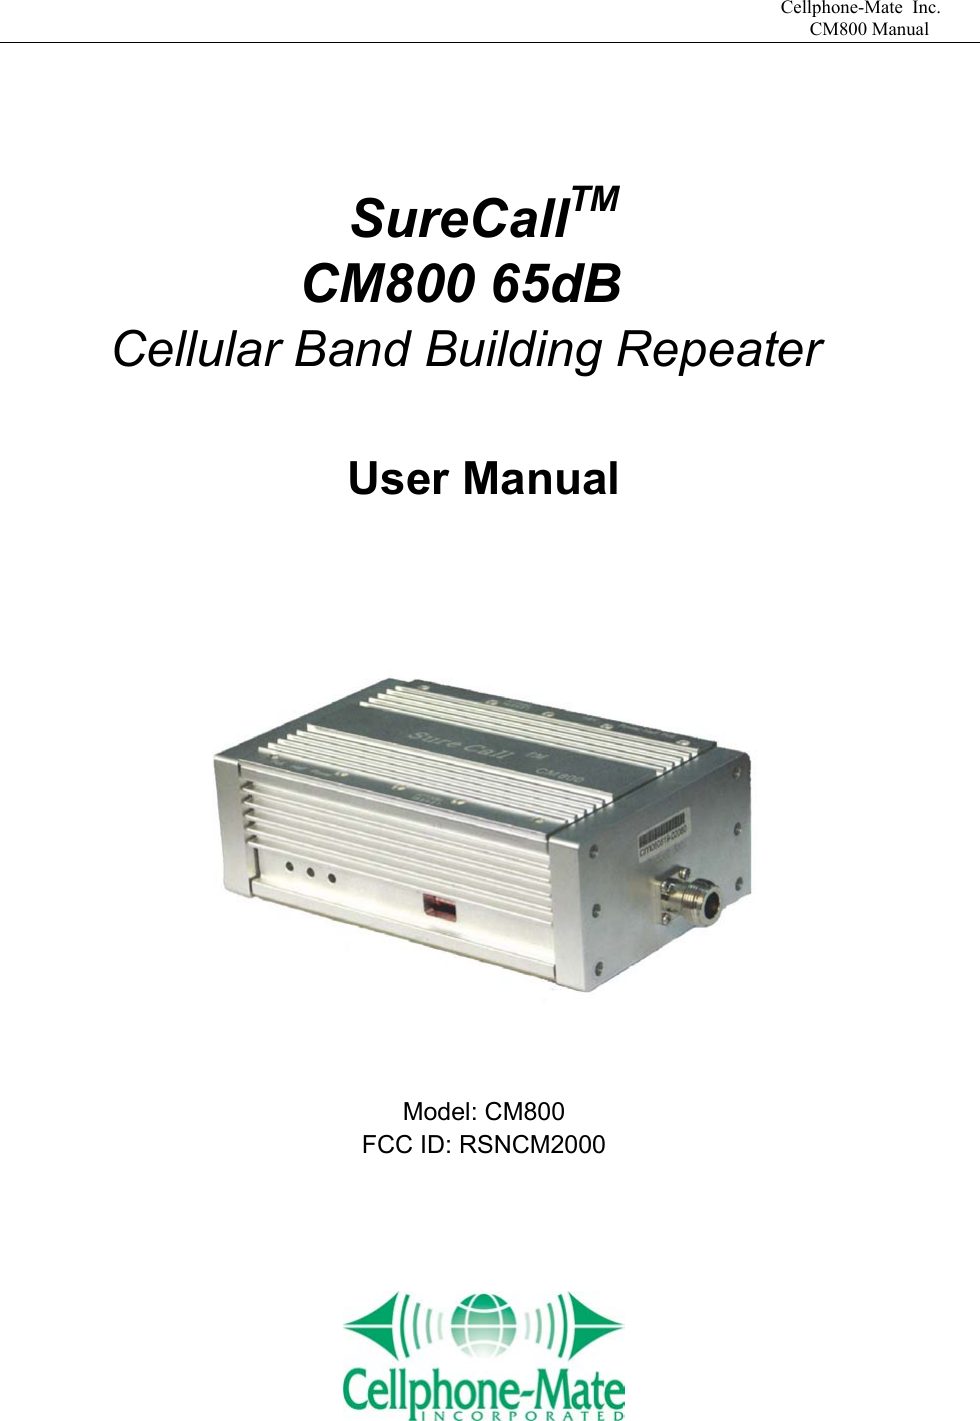                             Cellphone-Mate Inc.                                                                                  CM800 Manual   SureCallTM            CM800 65dB     Cellular Band Building Repeater  User Manual     Model: CM800 FCC ID: RSNCM2000        